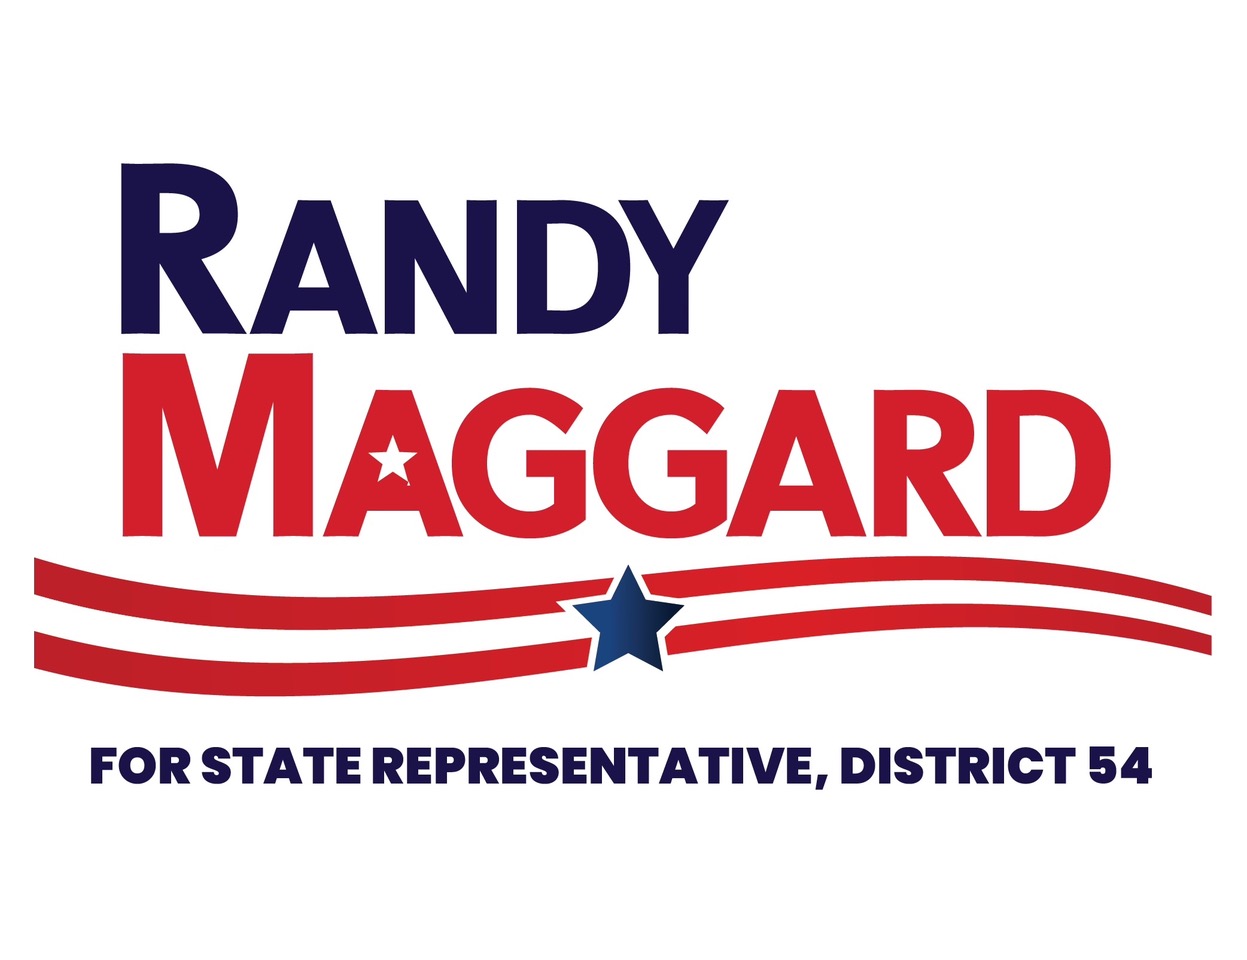 Randy Maggard for State Representative